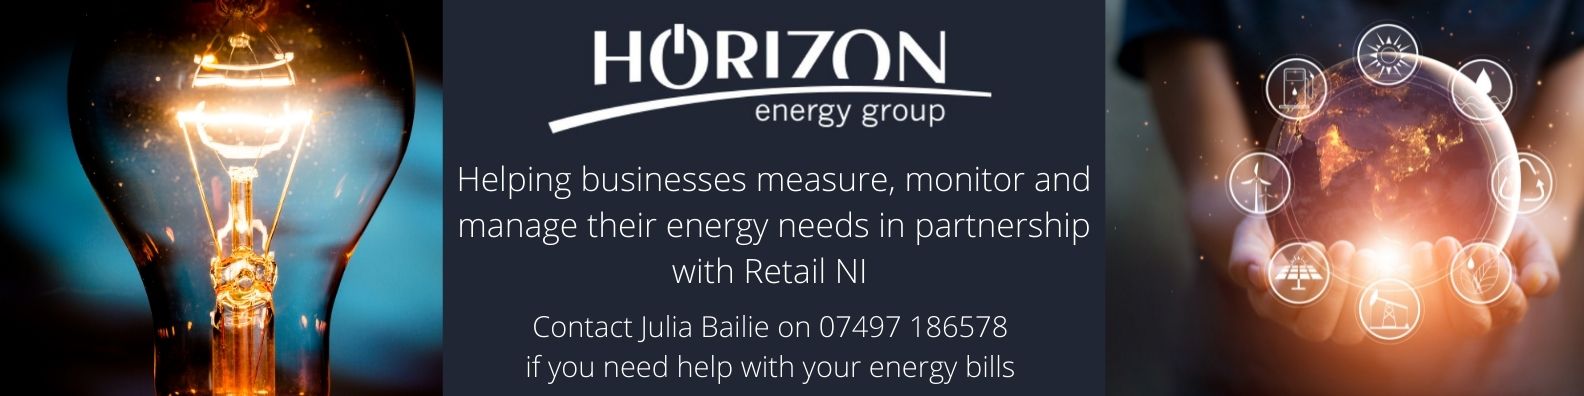 Horizon Energy Group